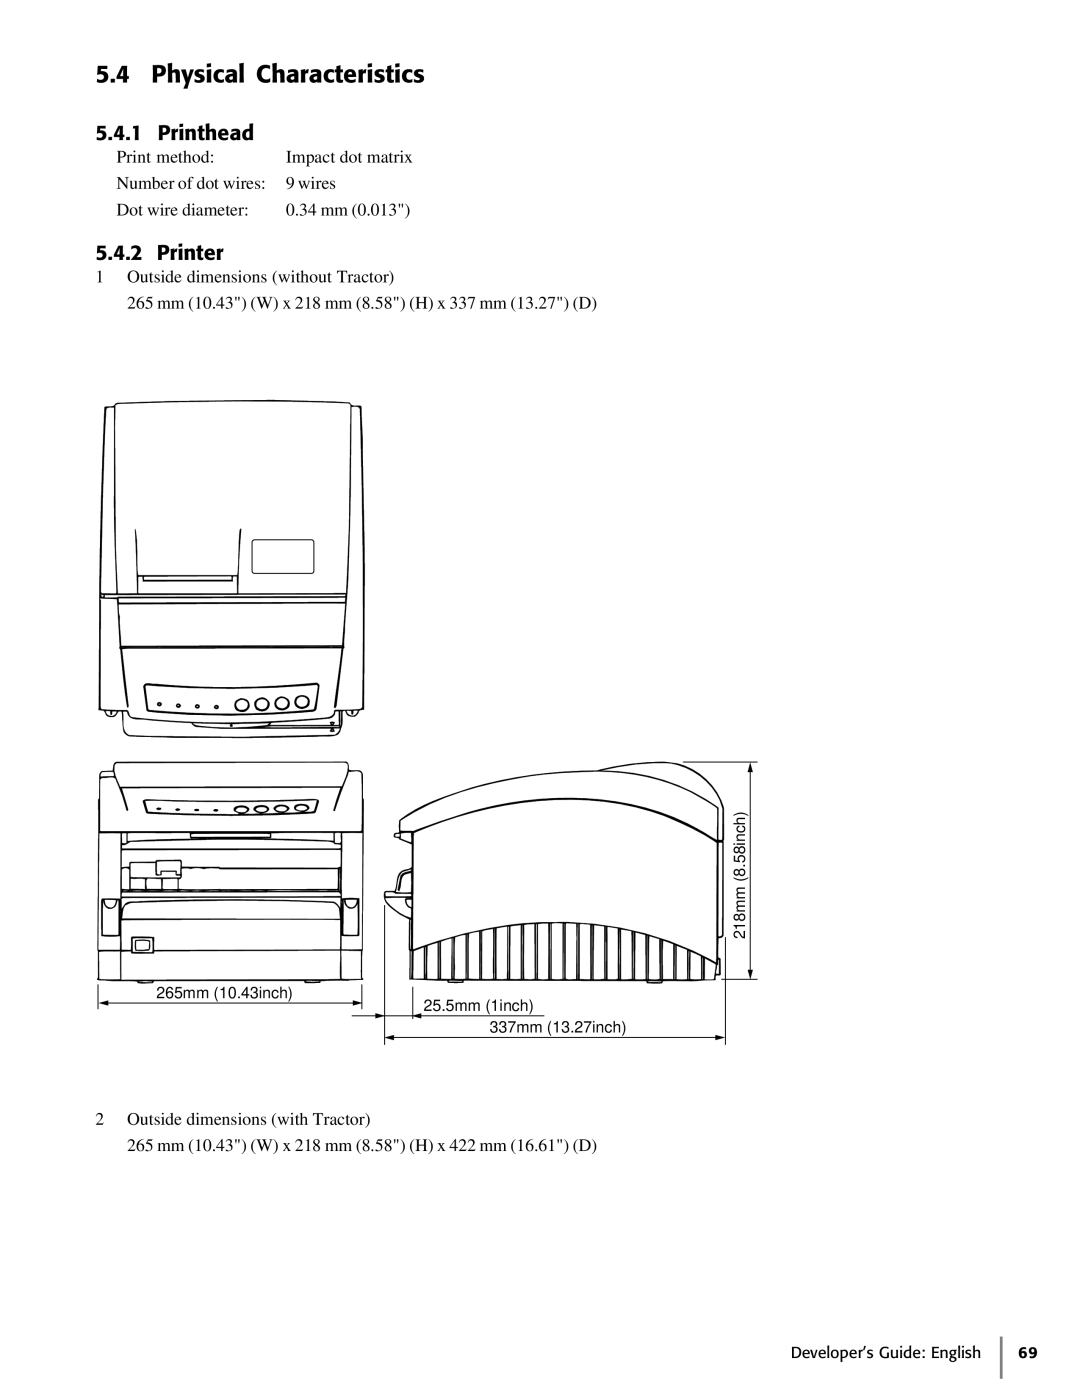 Oki 425D manual Physical Characteristics, Printhead, Printer 